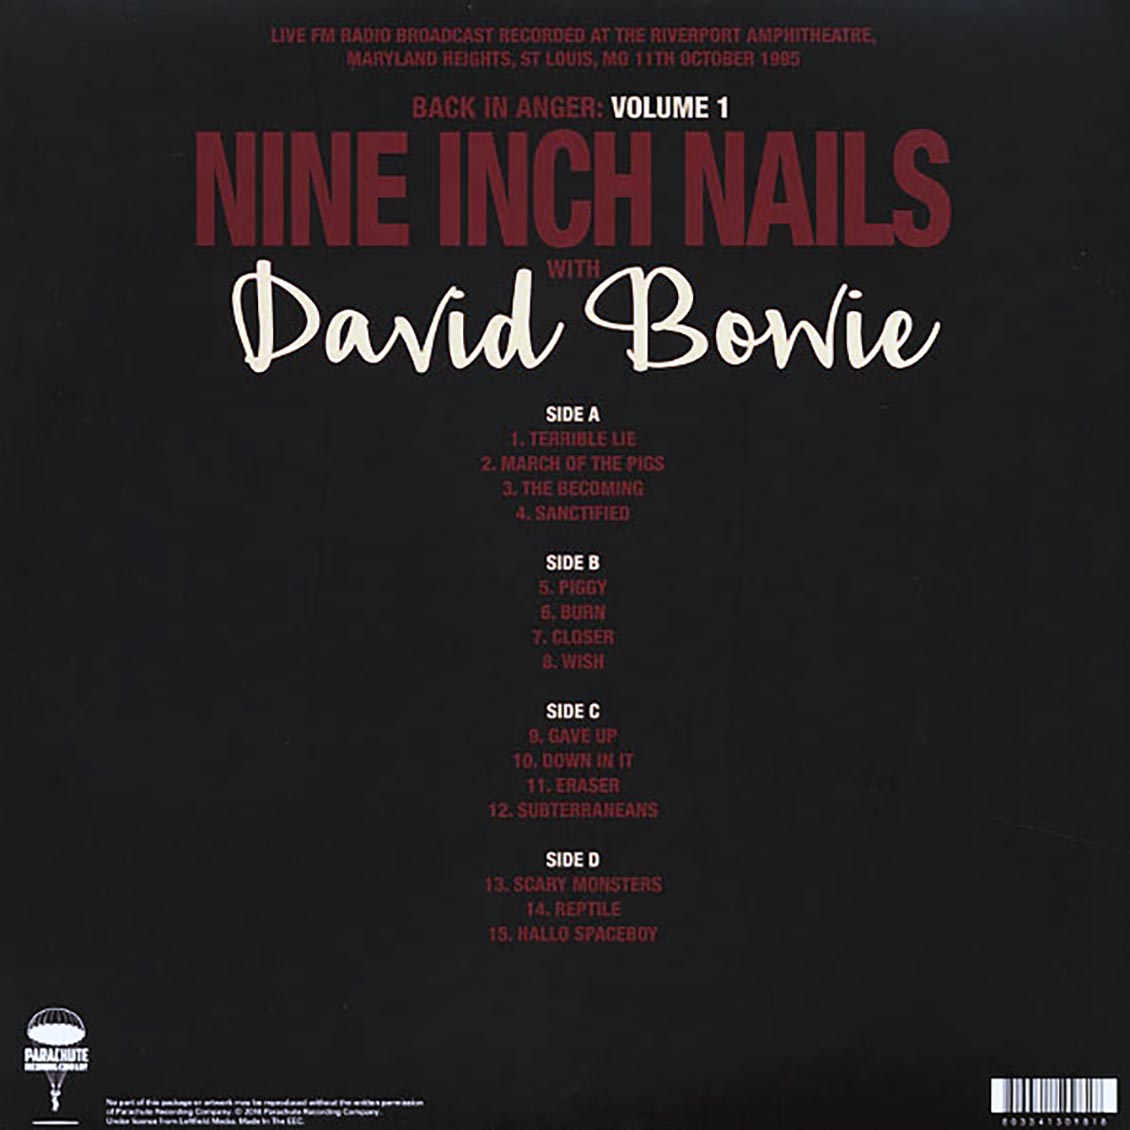 Nine Inch Nails, David Bowie - Back In Anger: Volume 1 (ltd. ed.) (2xLP) - Vinyl LP, LP